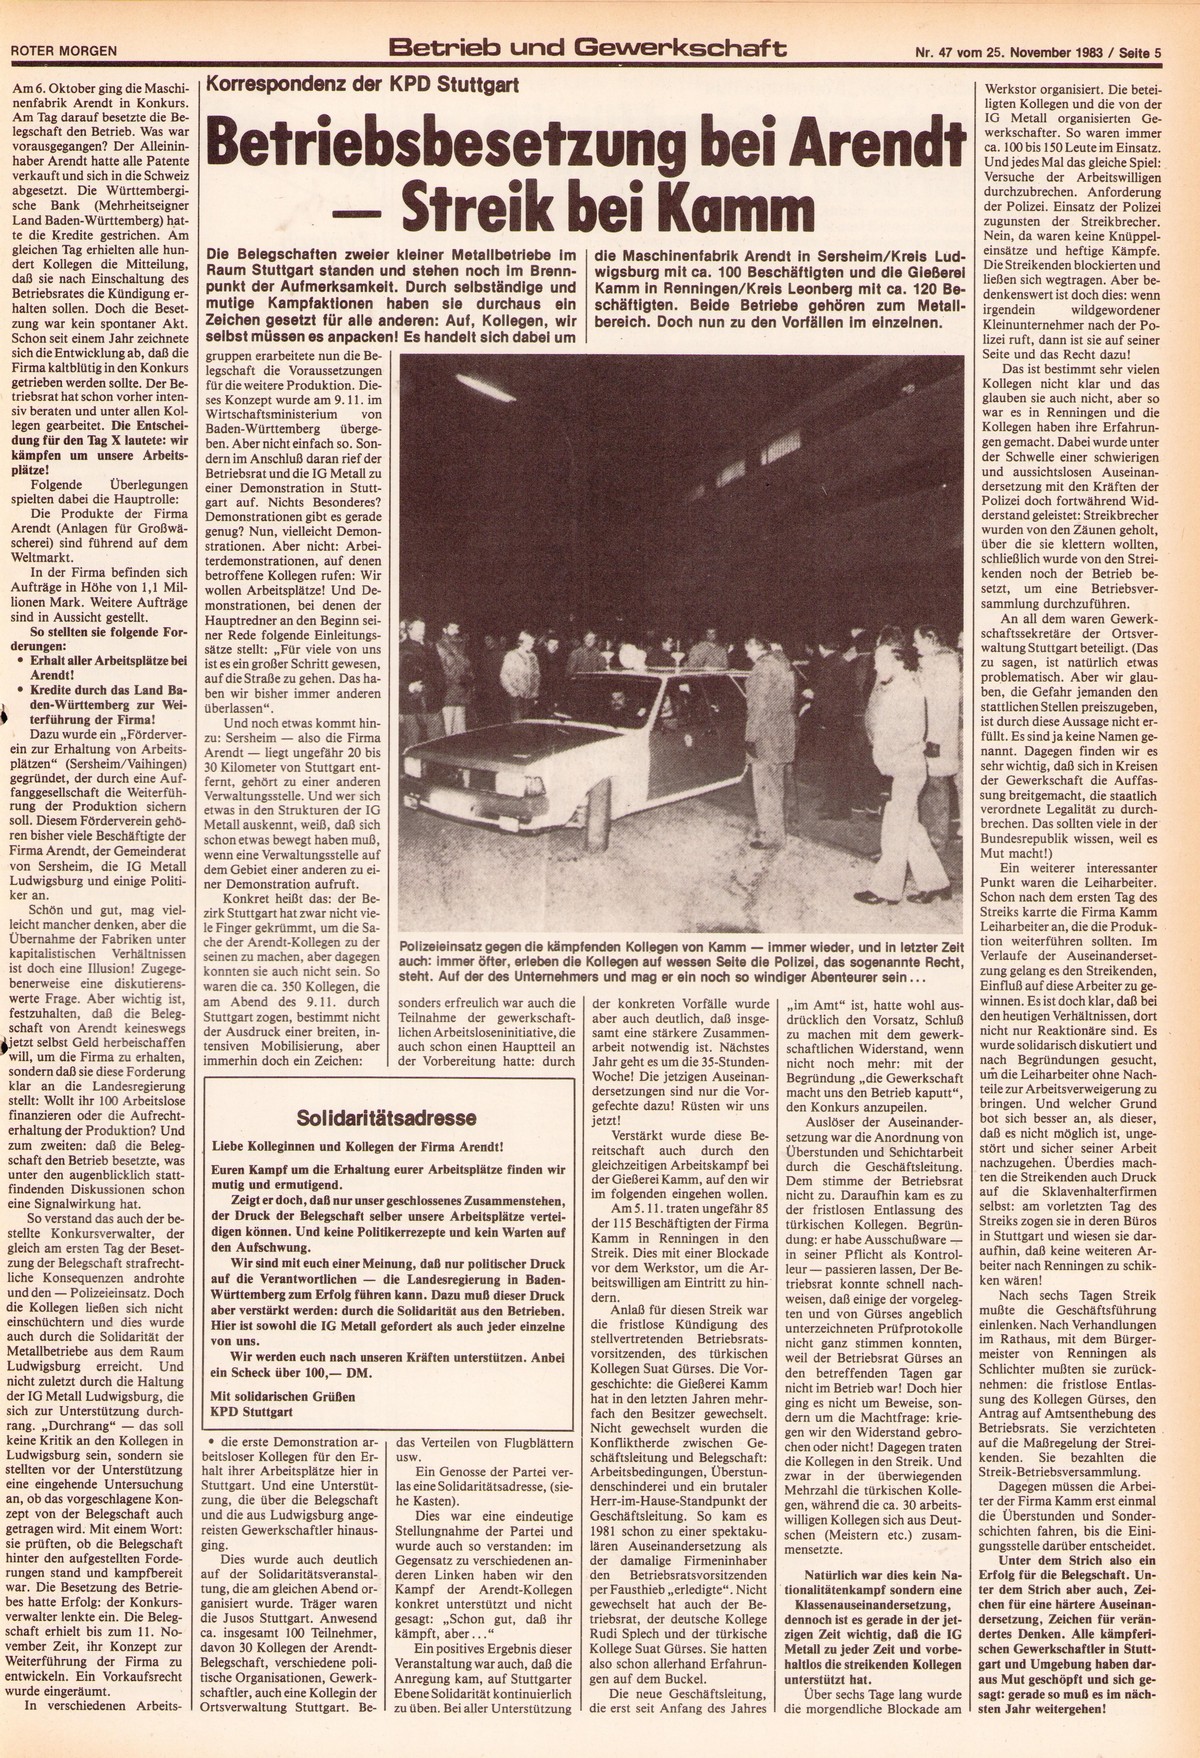 Roter Morgen, 17. Jg., 25. November 1983, Nr. 47, Seite 5